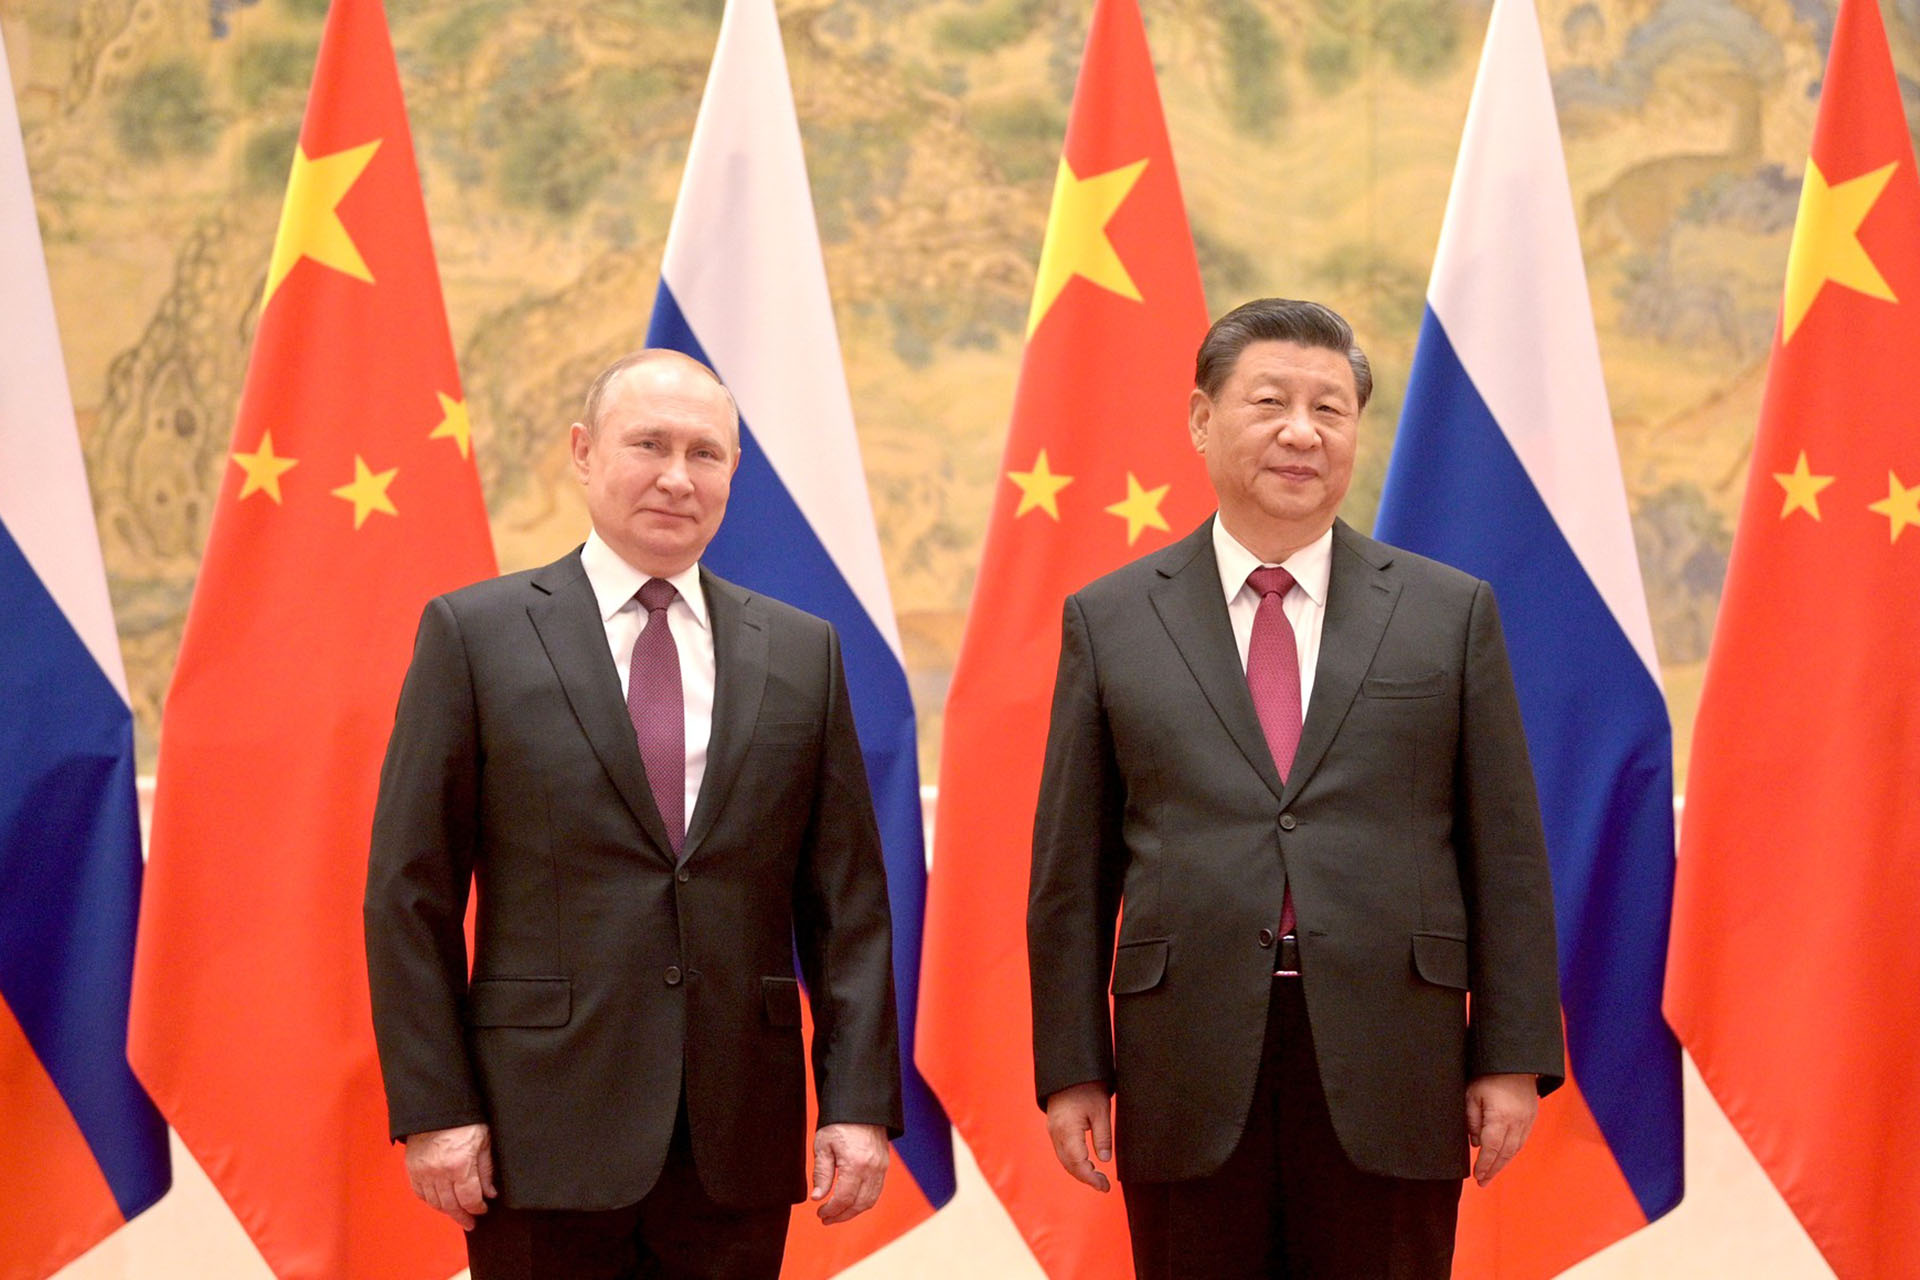 Bild: kremlin.ru, Vladimir Putin met with Xi Jinping in advance of 2022 Beijing Winter Olympics, CC BY 4.0, via Wikimedia Commons (Bildgröße geändert)